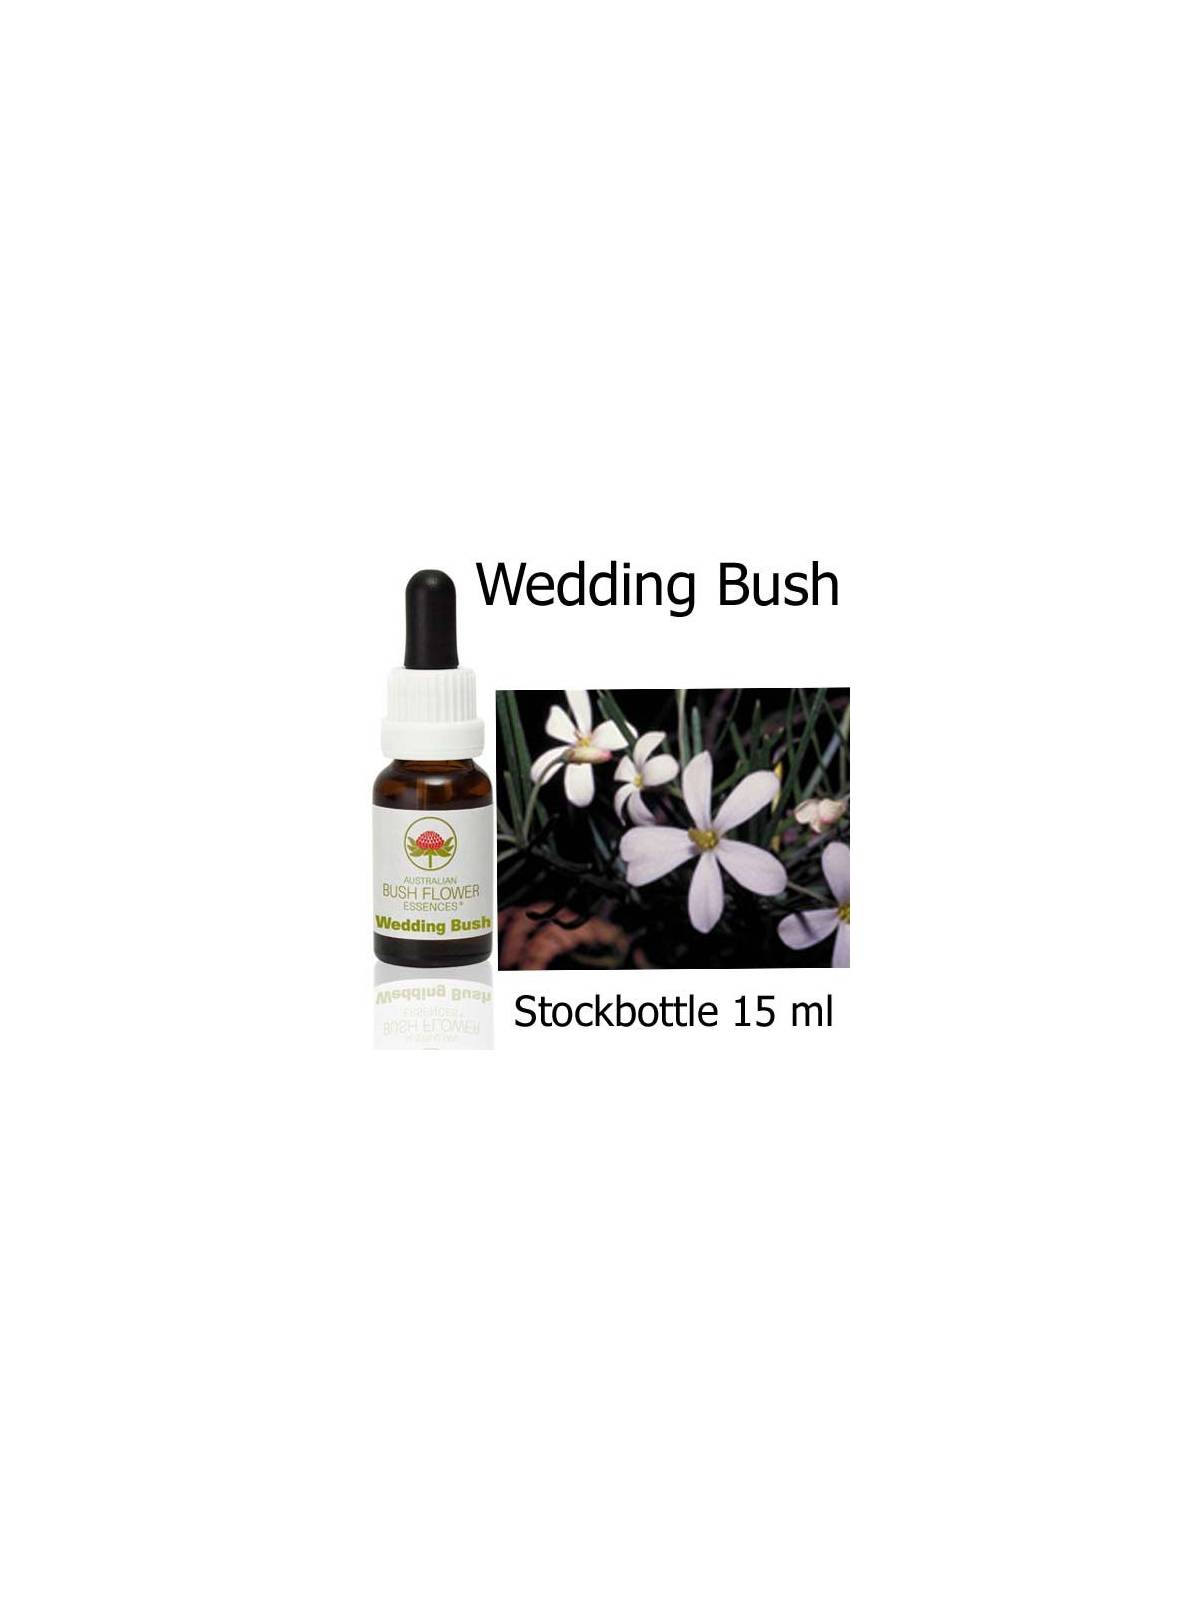 Fiori Australiani Wedding Bush Australian Bush Flower Essences stockbottles